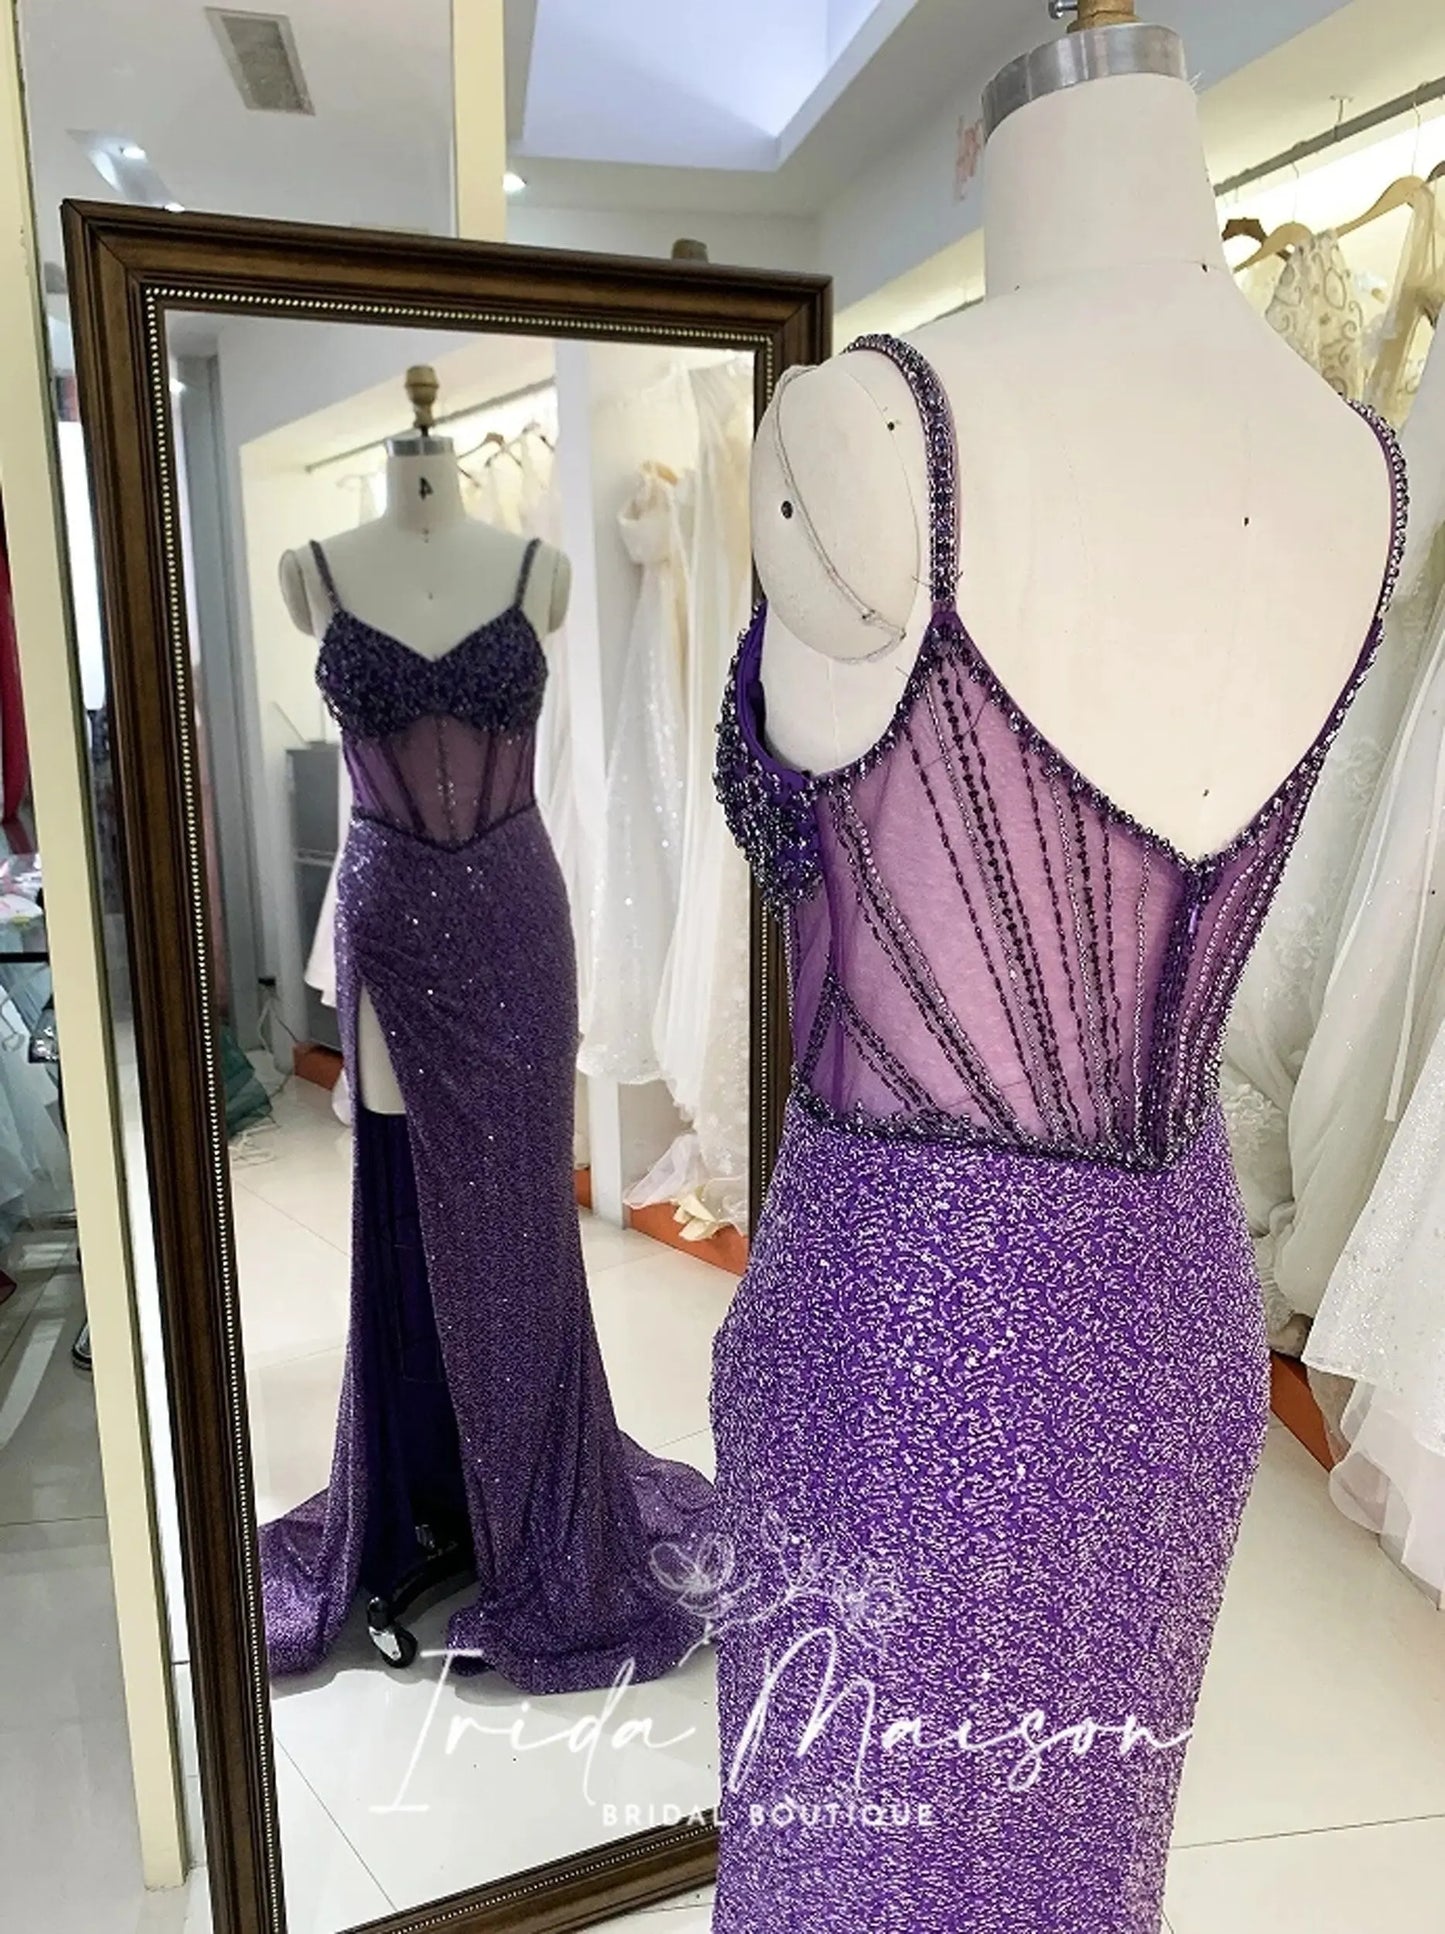 Sequin shiny high slit Prom dress, Cocktail Dress,Red Carpet Dress, Party Dress, Special Occasion Dress, Event Dress, Classy Dress